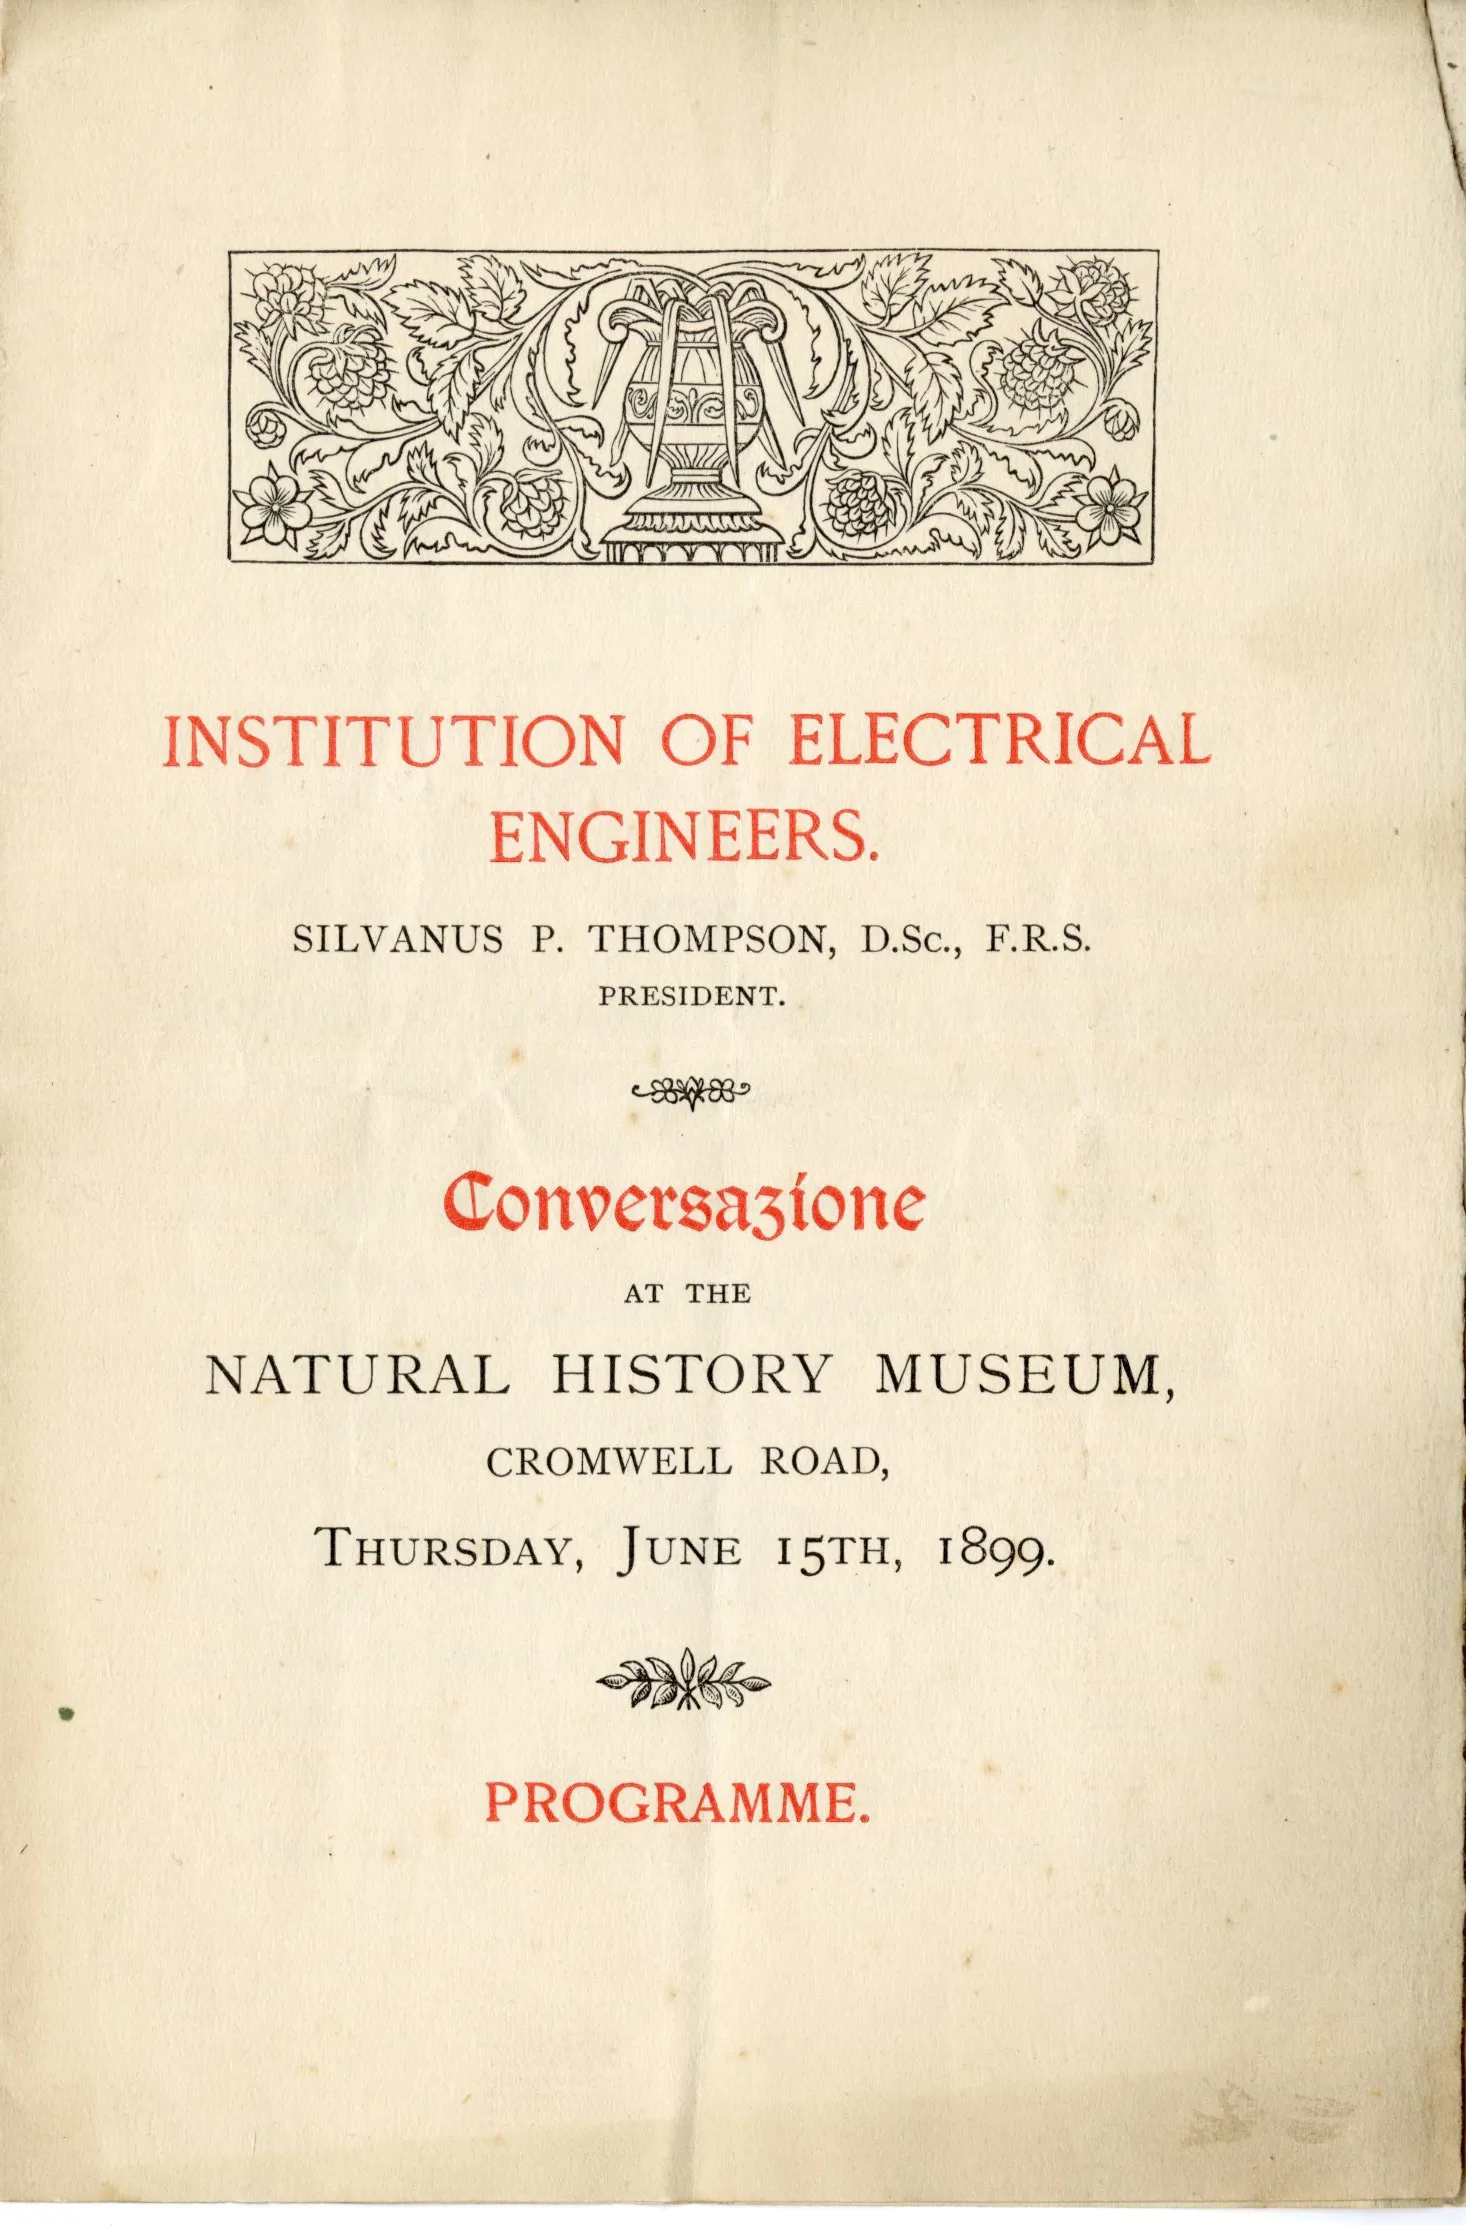 IEE Conversazione programme from 1899